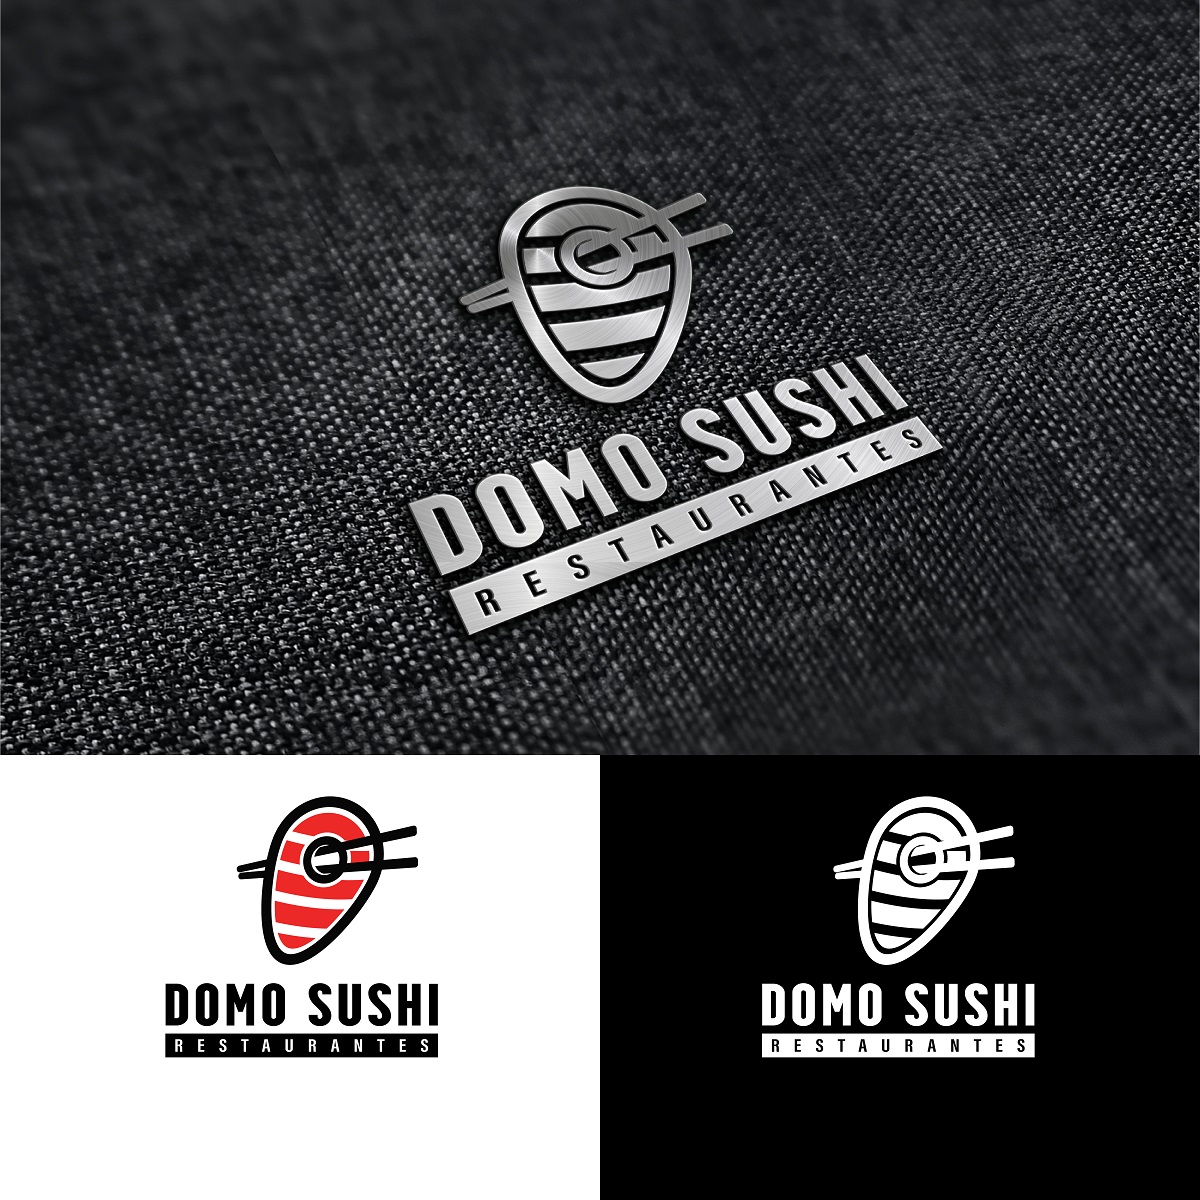 Domo Sushi
.
.
.
.
#logo #logos #logotype #logodesigner #customlogo #brandidentity #graphicdesigner #design #identity #brandlogo #logomaker #designinspiration #branding #art #monogram #fashion #brand #ilustracion #Creative #elangelitodesign #designrd #marca #Flyers